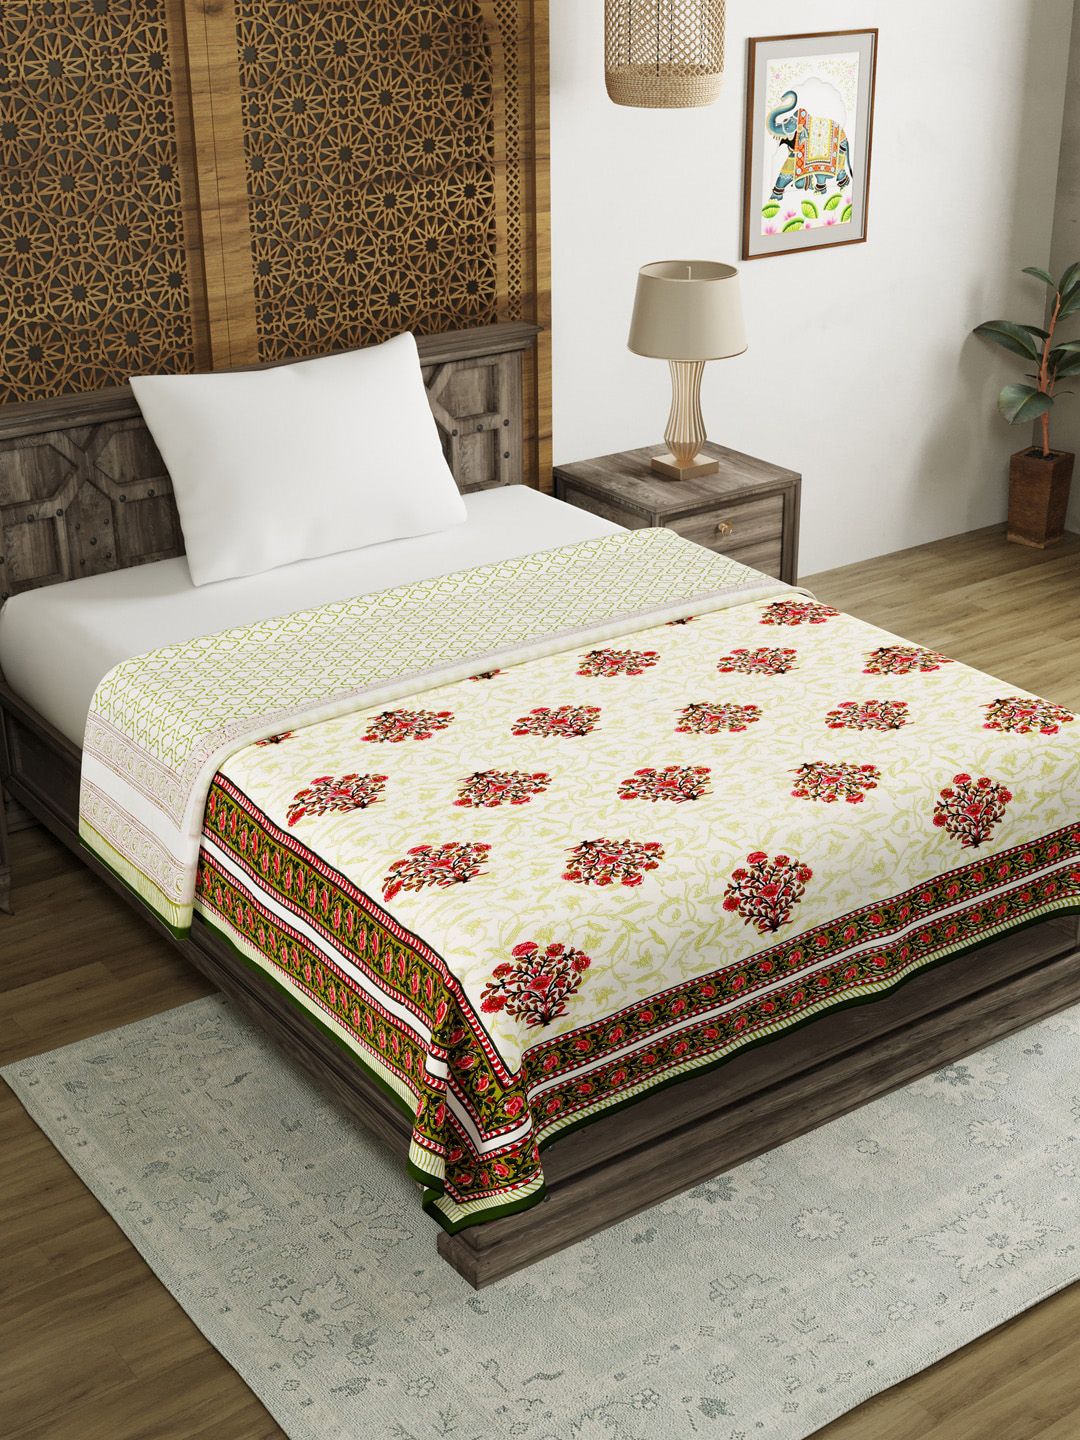 BLOCKS OF INDIA Cream-Coloured & Pink Ethnic Motifs AC Room 150 GSM Single Bed Dohar Price in India